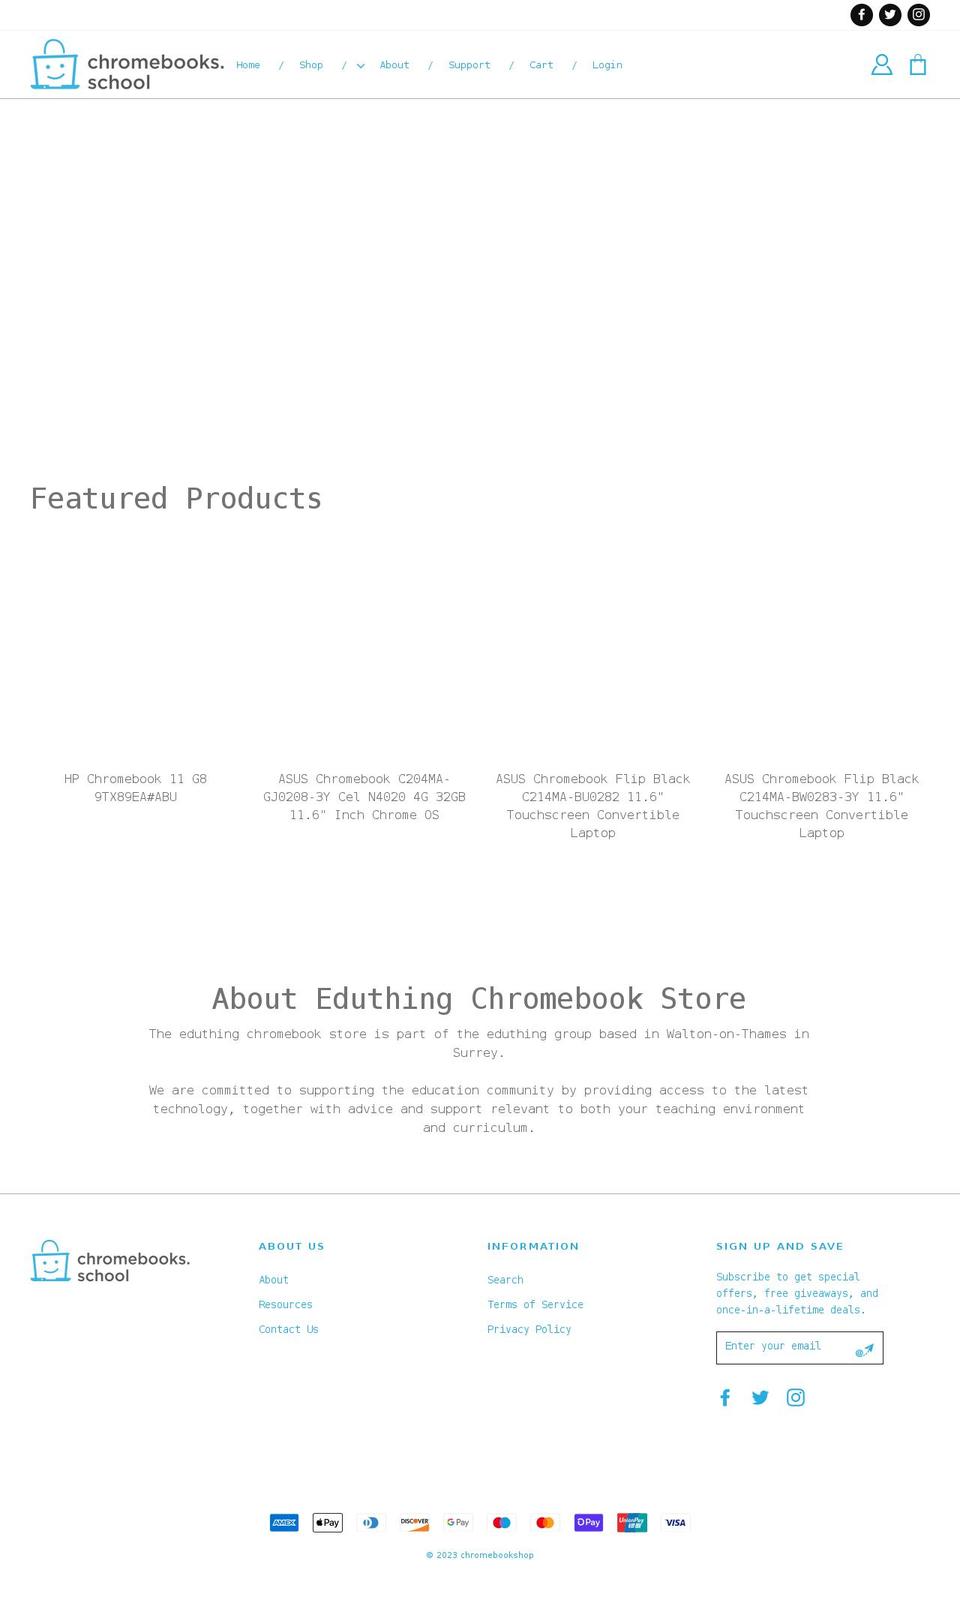 chromebooks.school shopify website screenshot